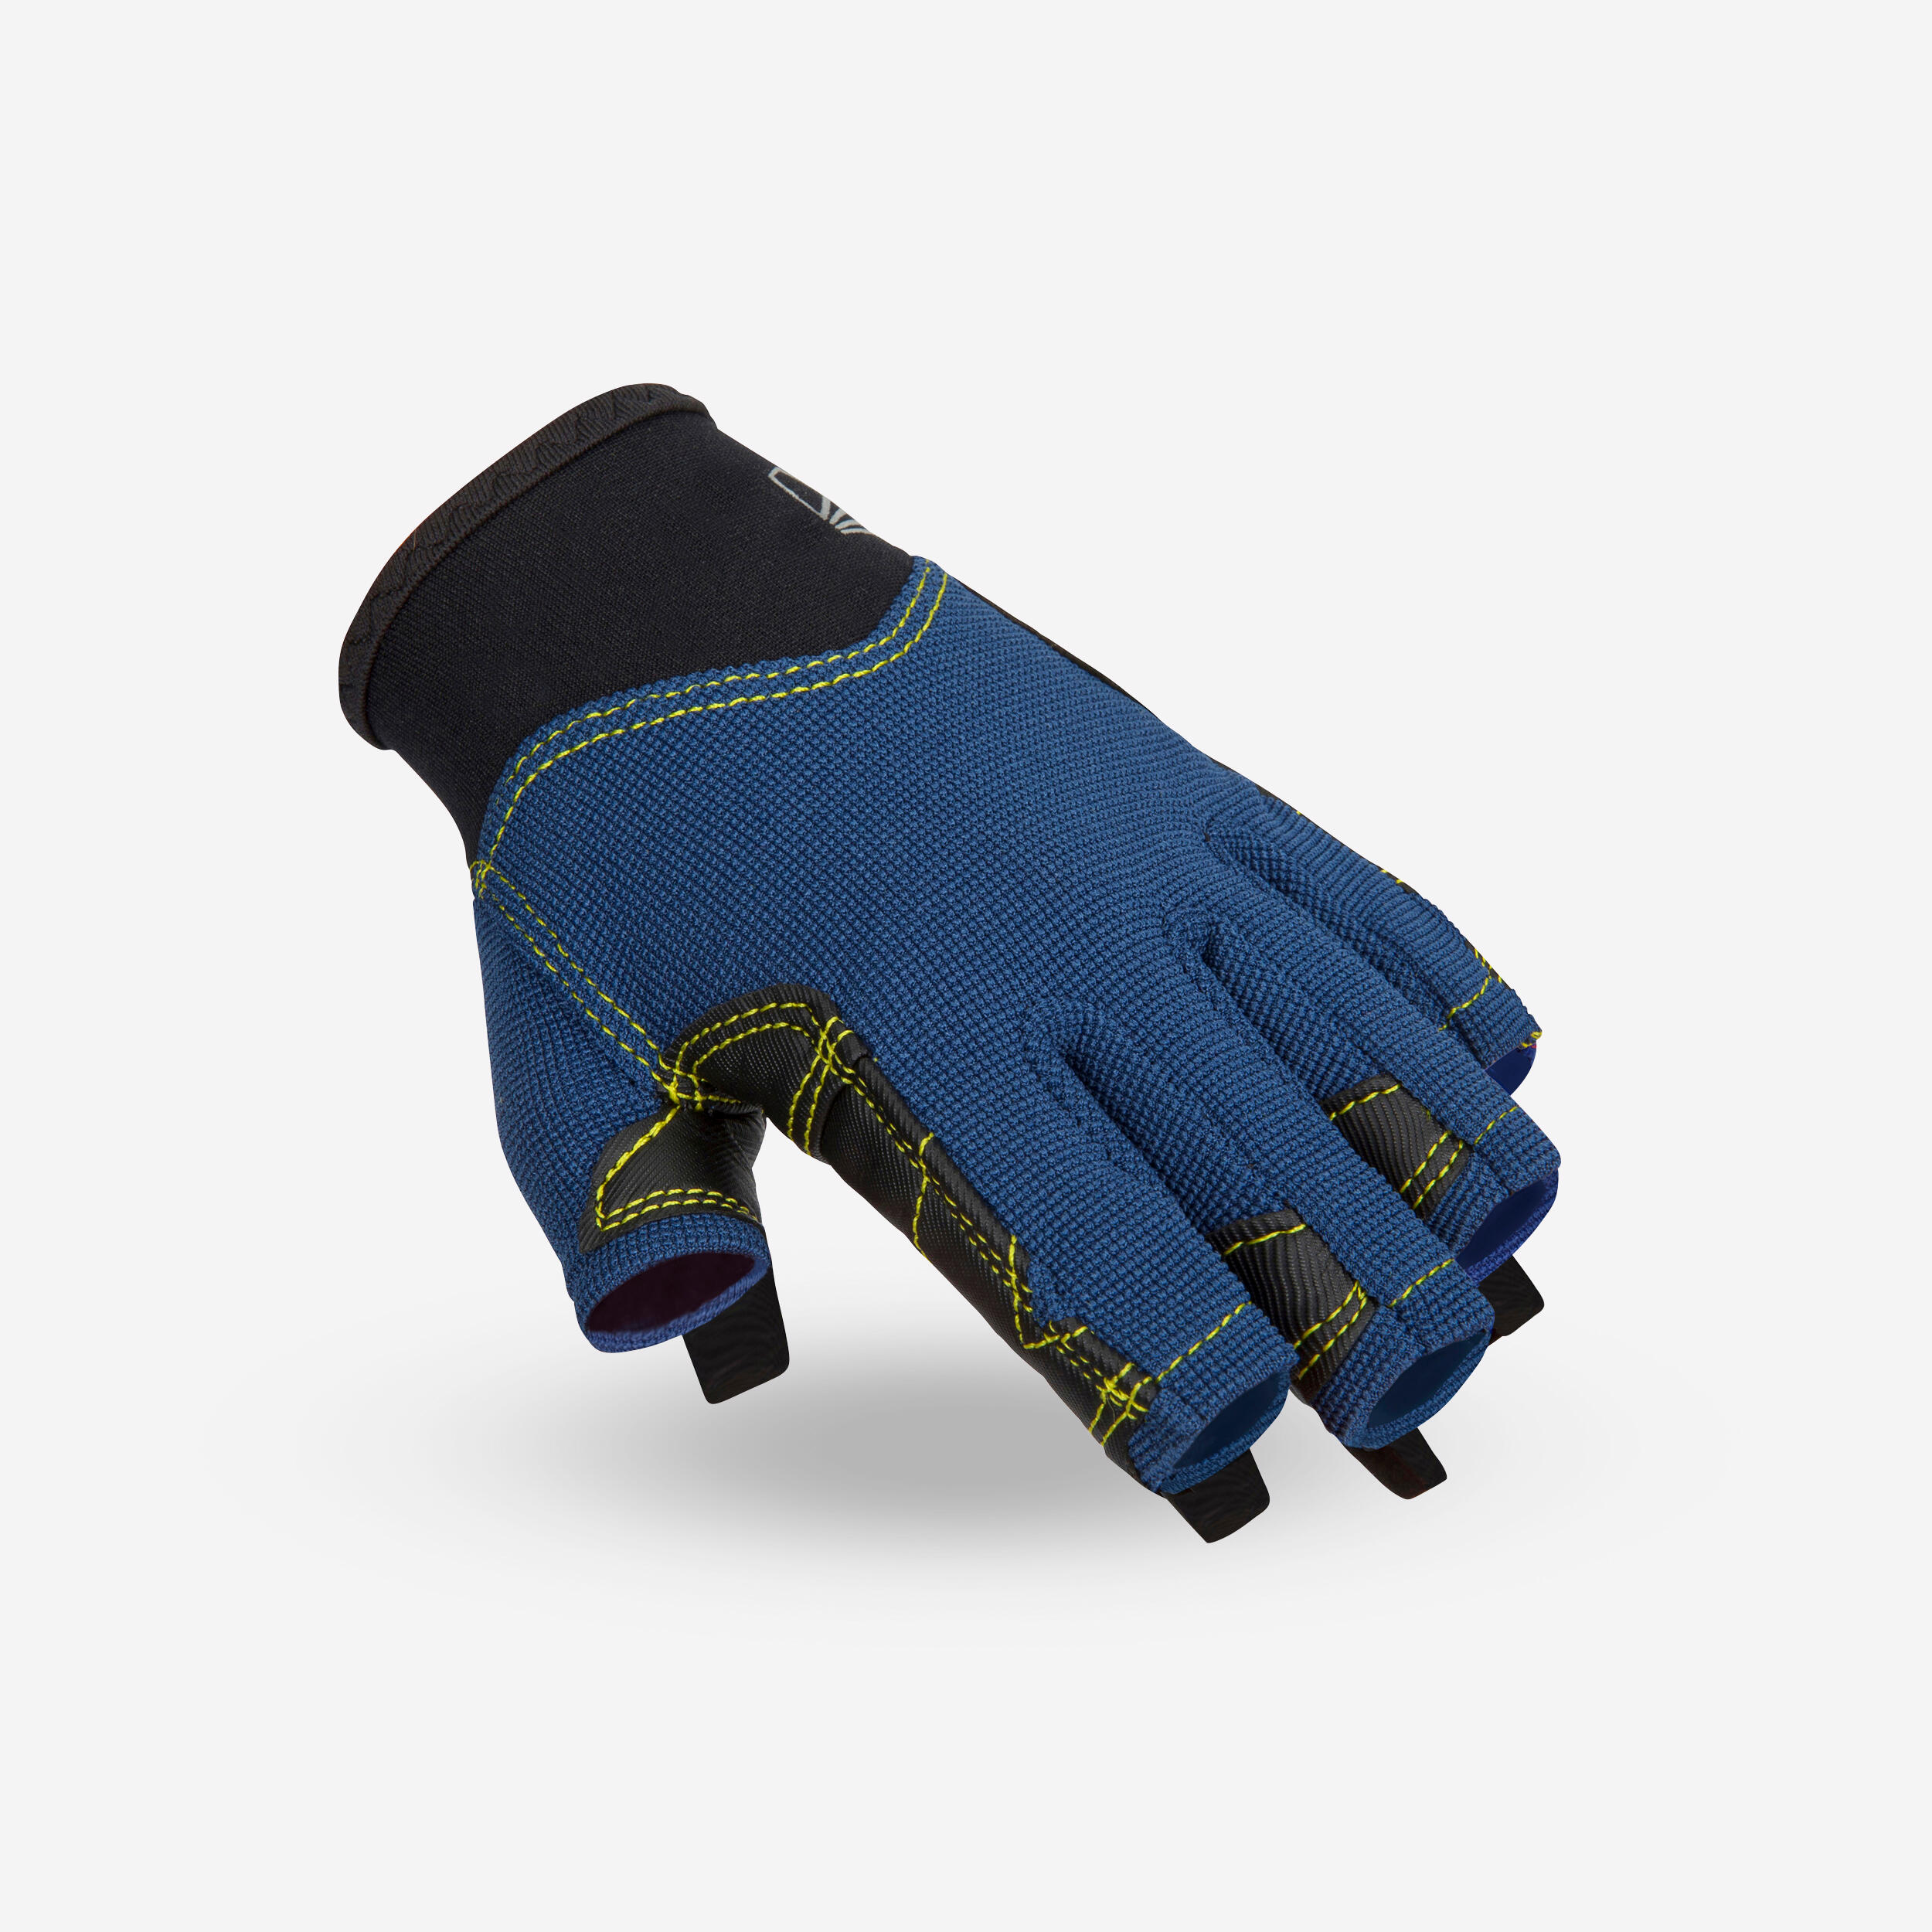 Men's Sailing Gloves